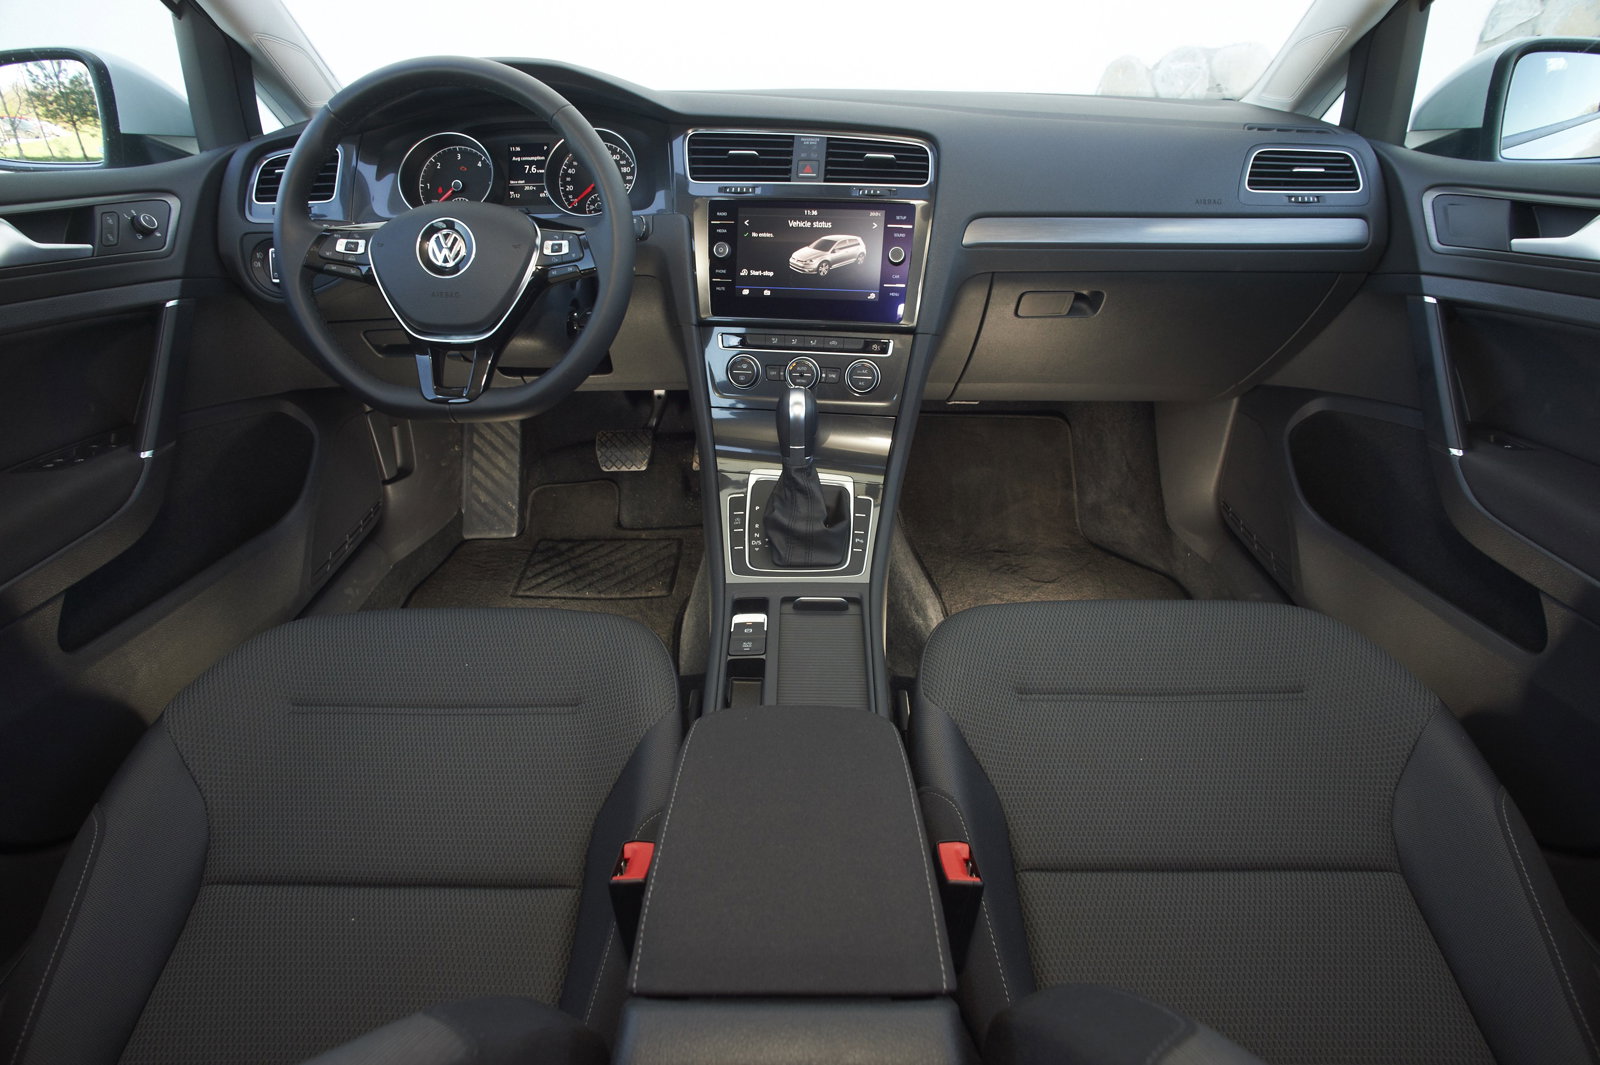 VW Golf 1.6 TDI Comfortline DSG Test Drive - No face, no name, no ...